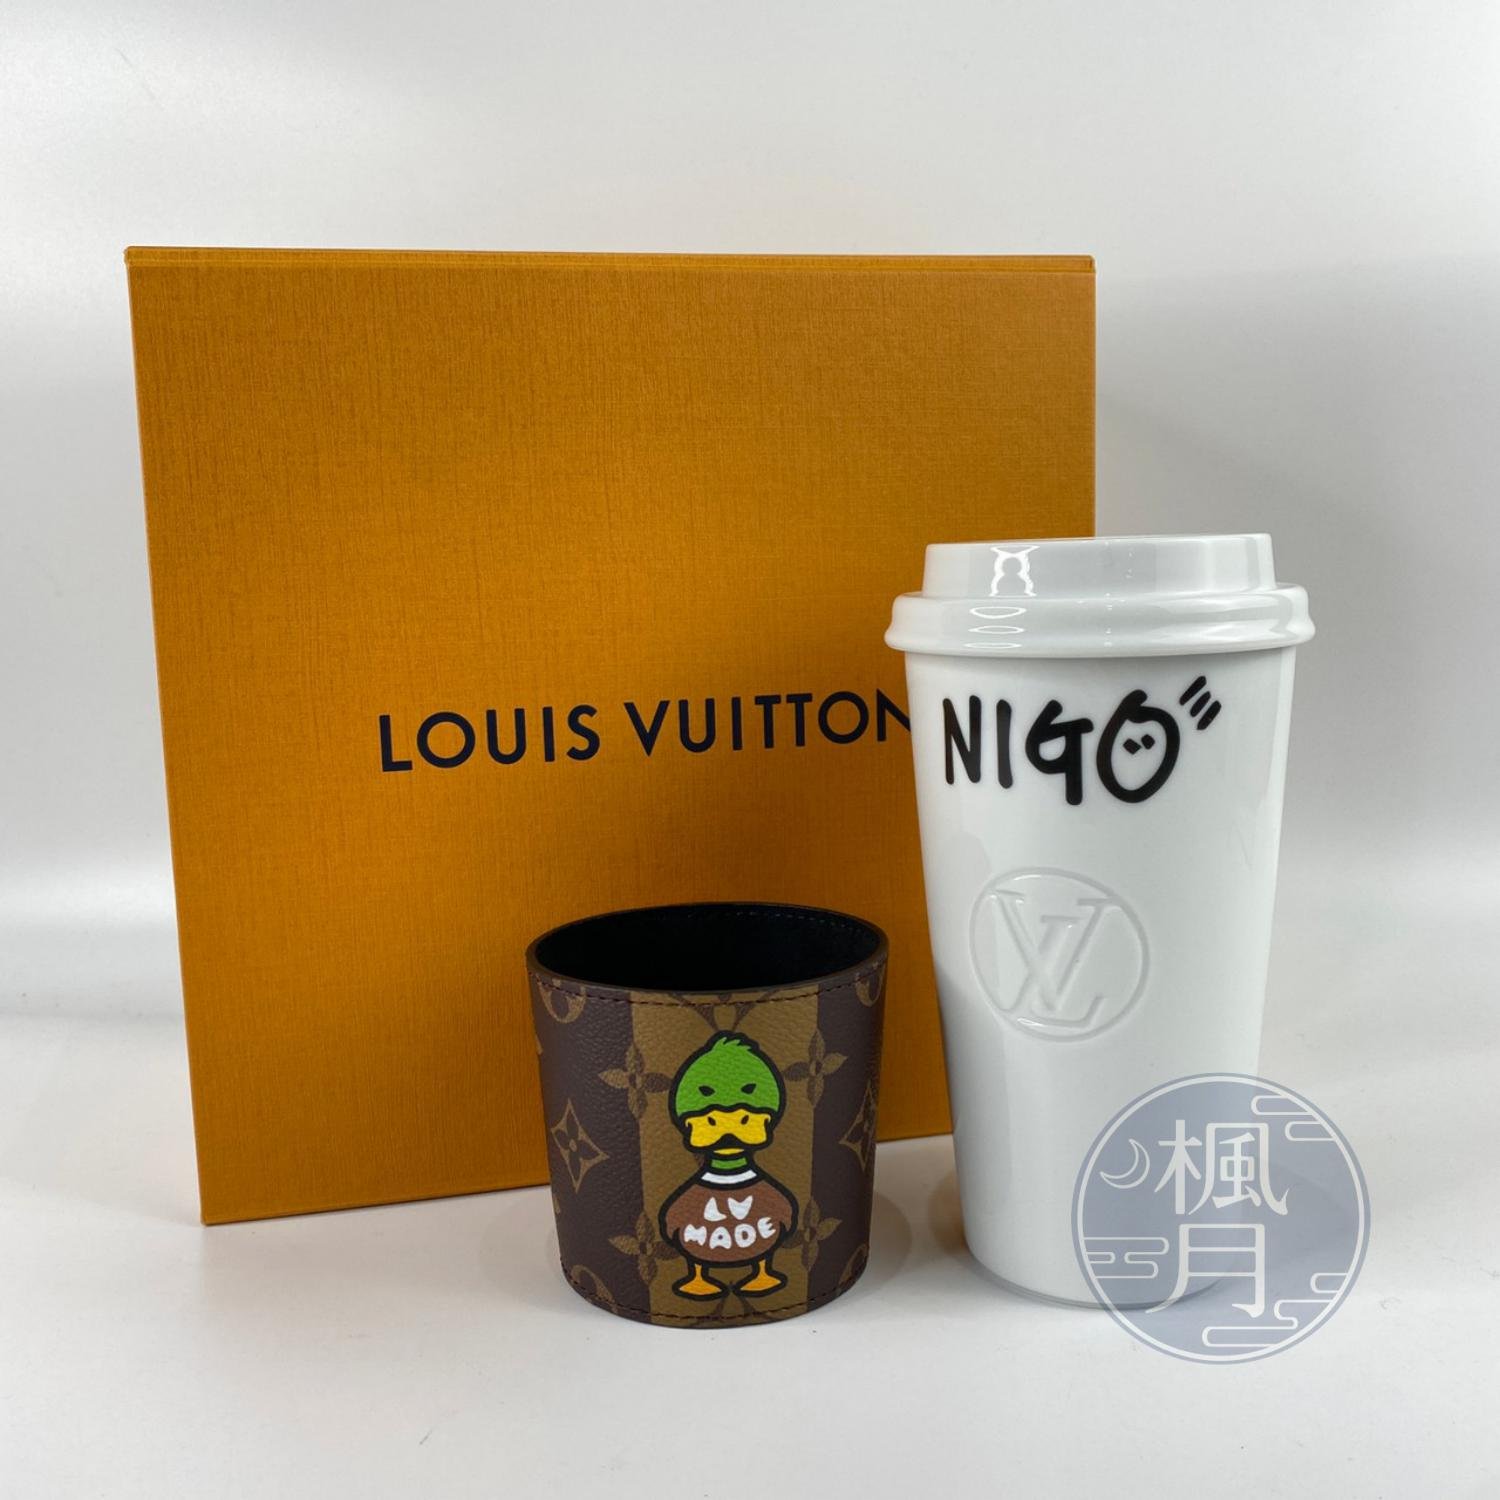 NIGO Coffee Cup Monogram - GI0731